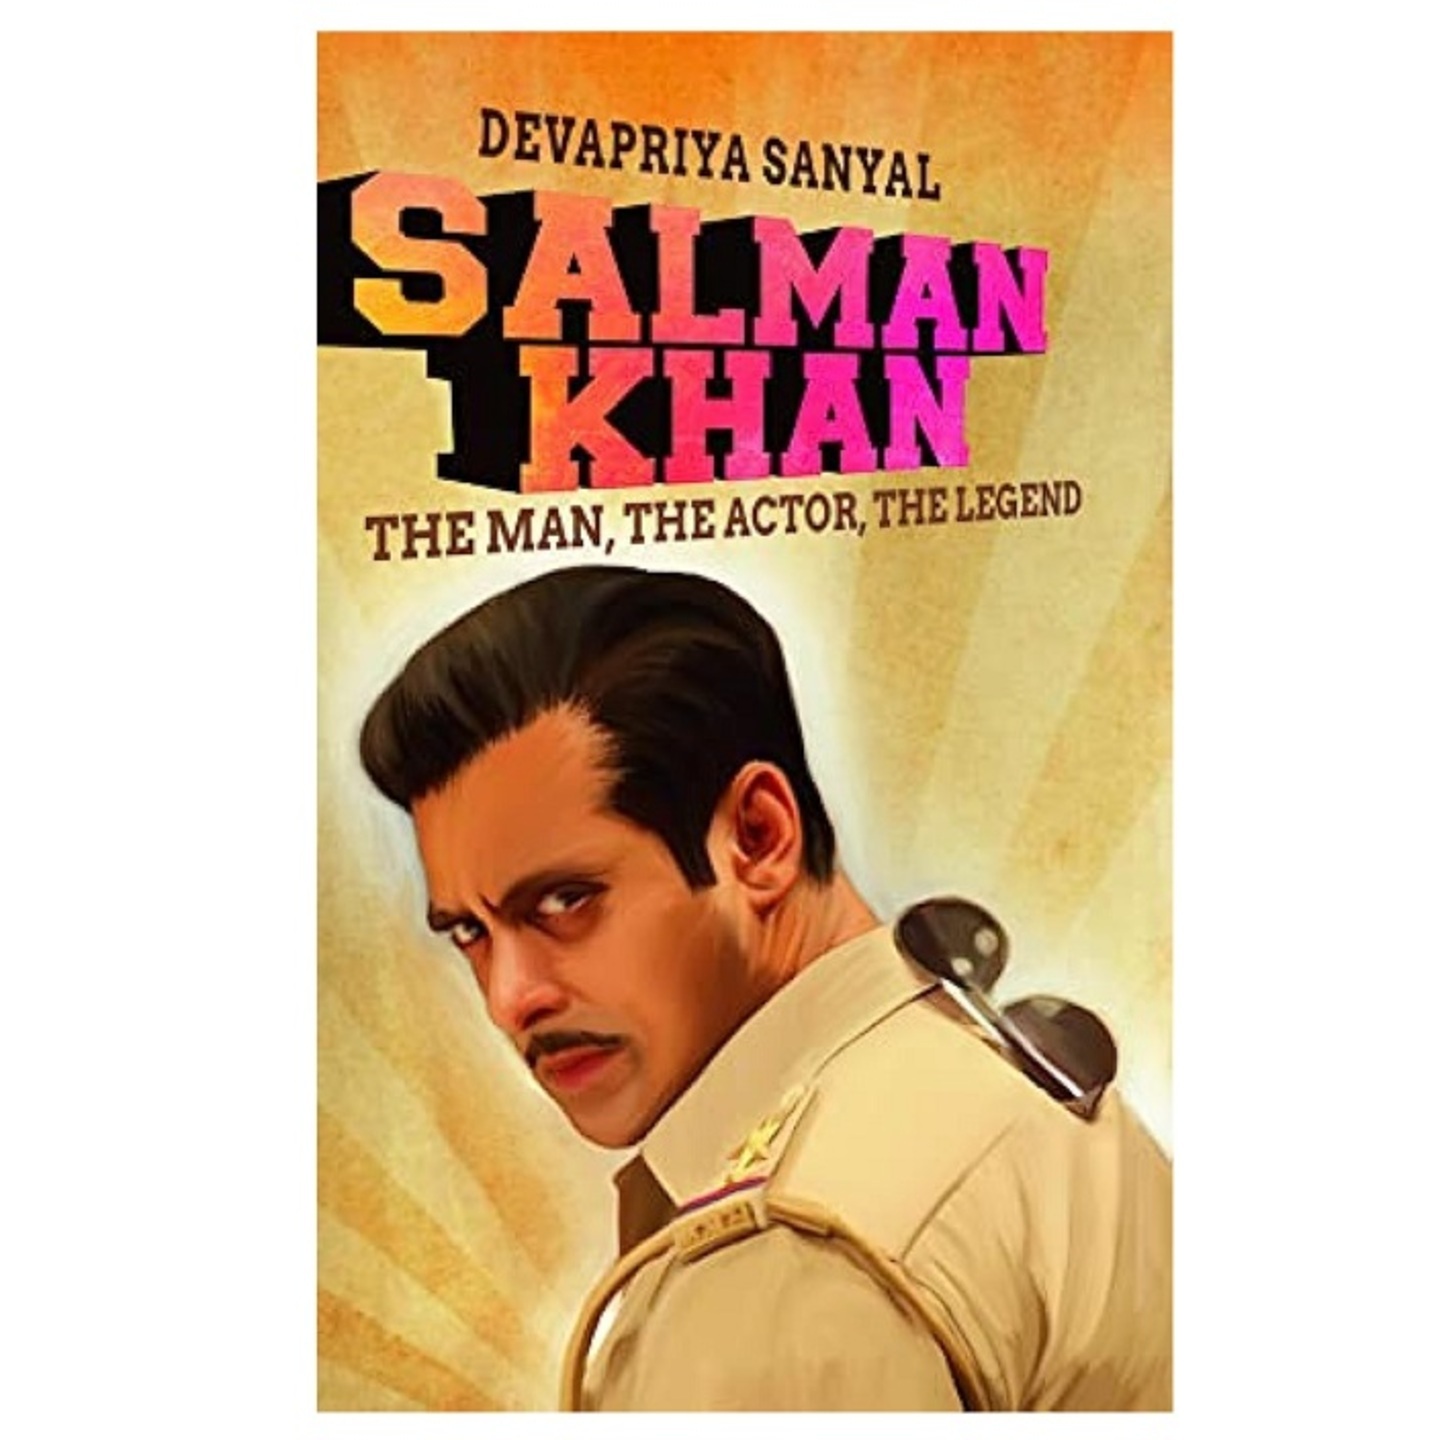 Book: Salman Khan - The Man, The Actor, The Legend (Hardcover)